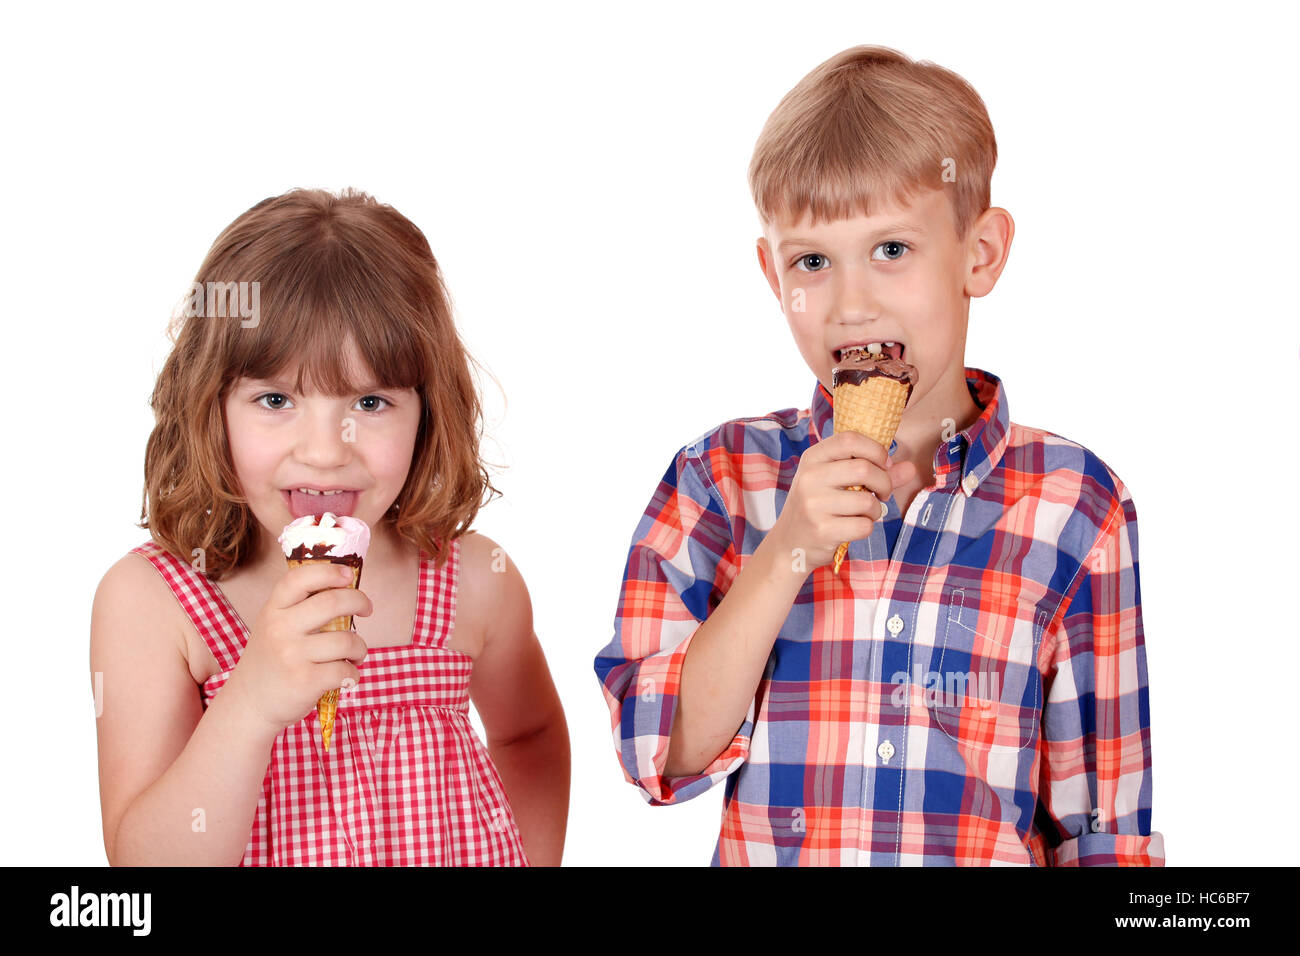 little girl and boy eat ice cream Stock Photo